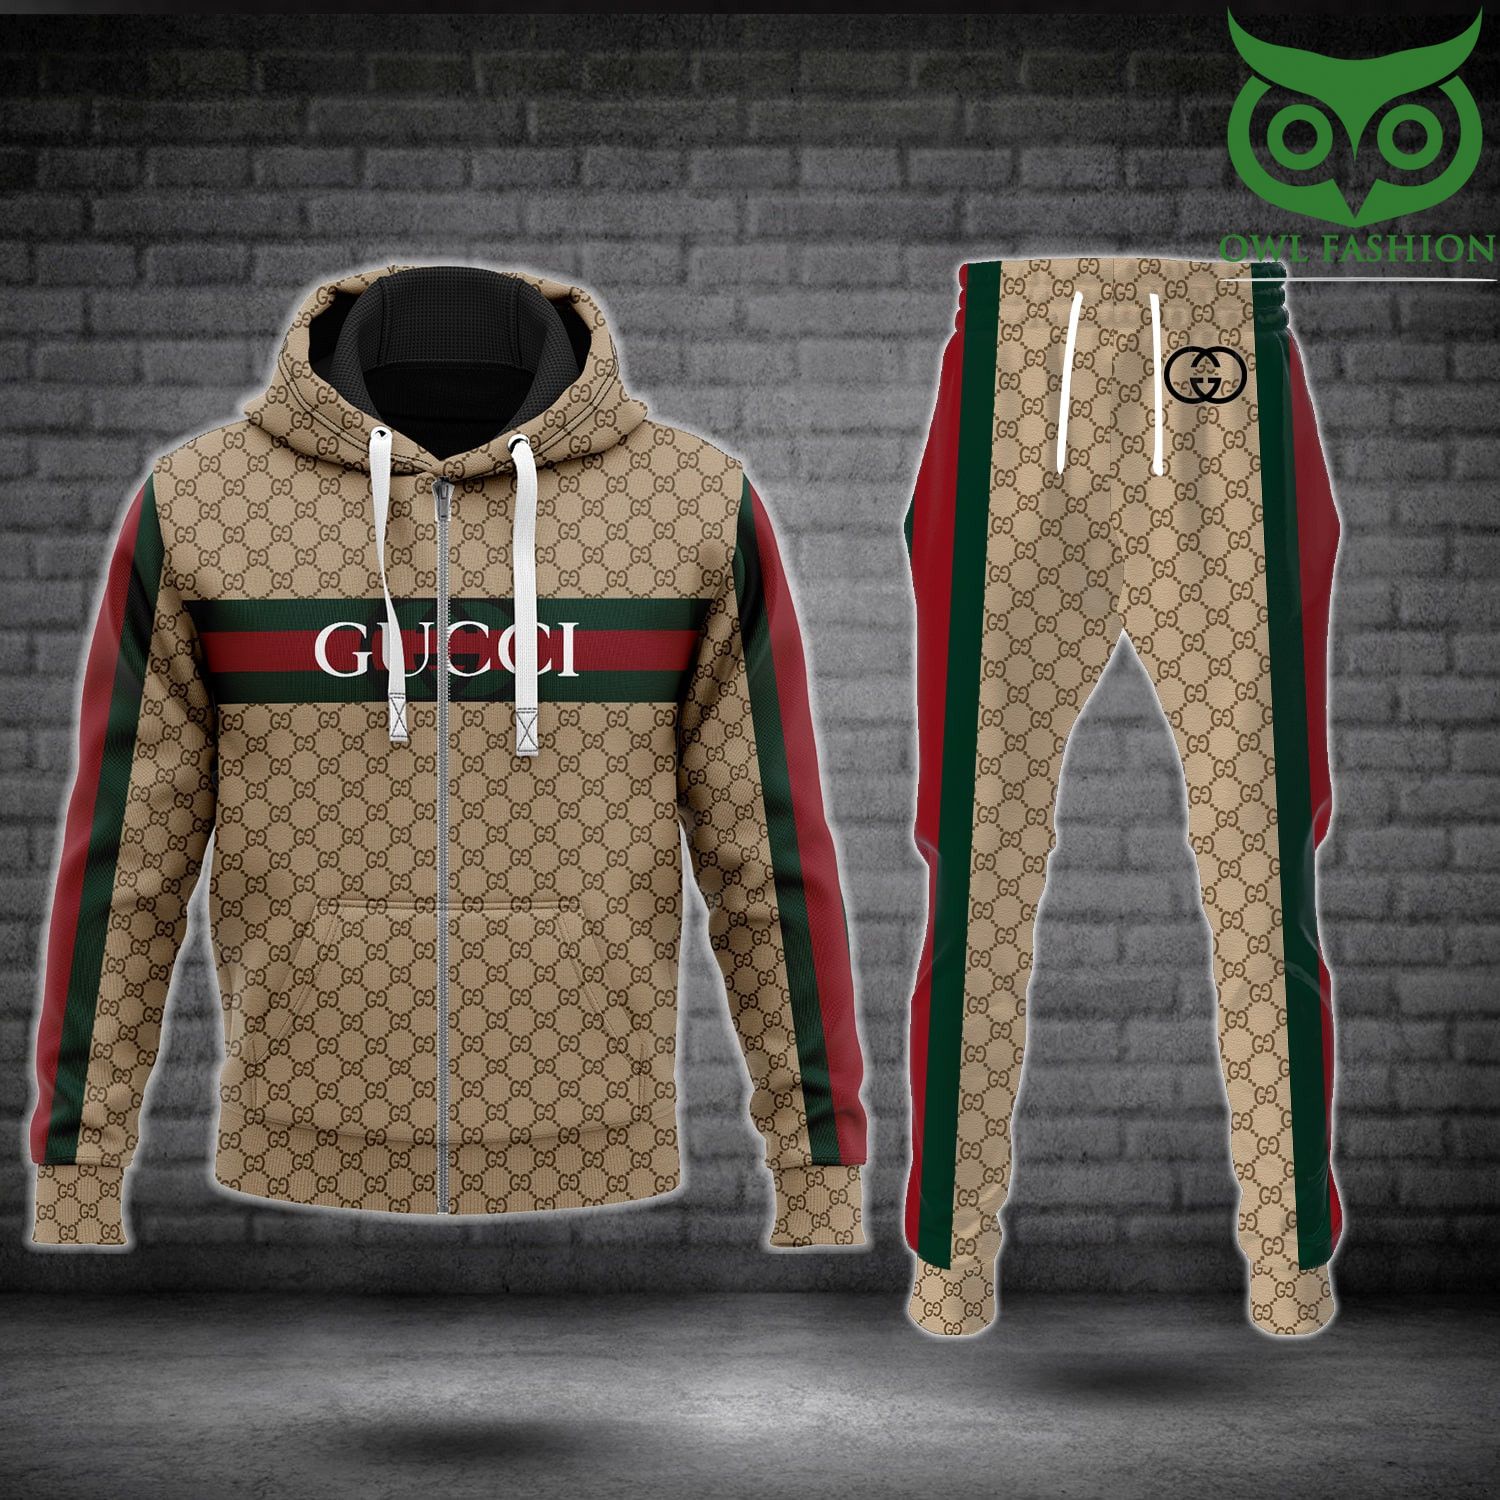 91 Gucci signature colors 3D hoodies and pants